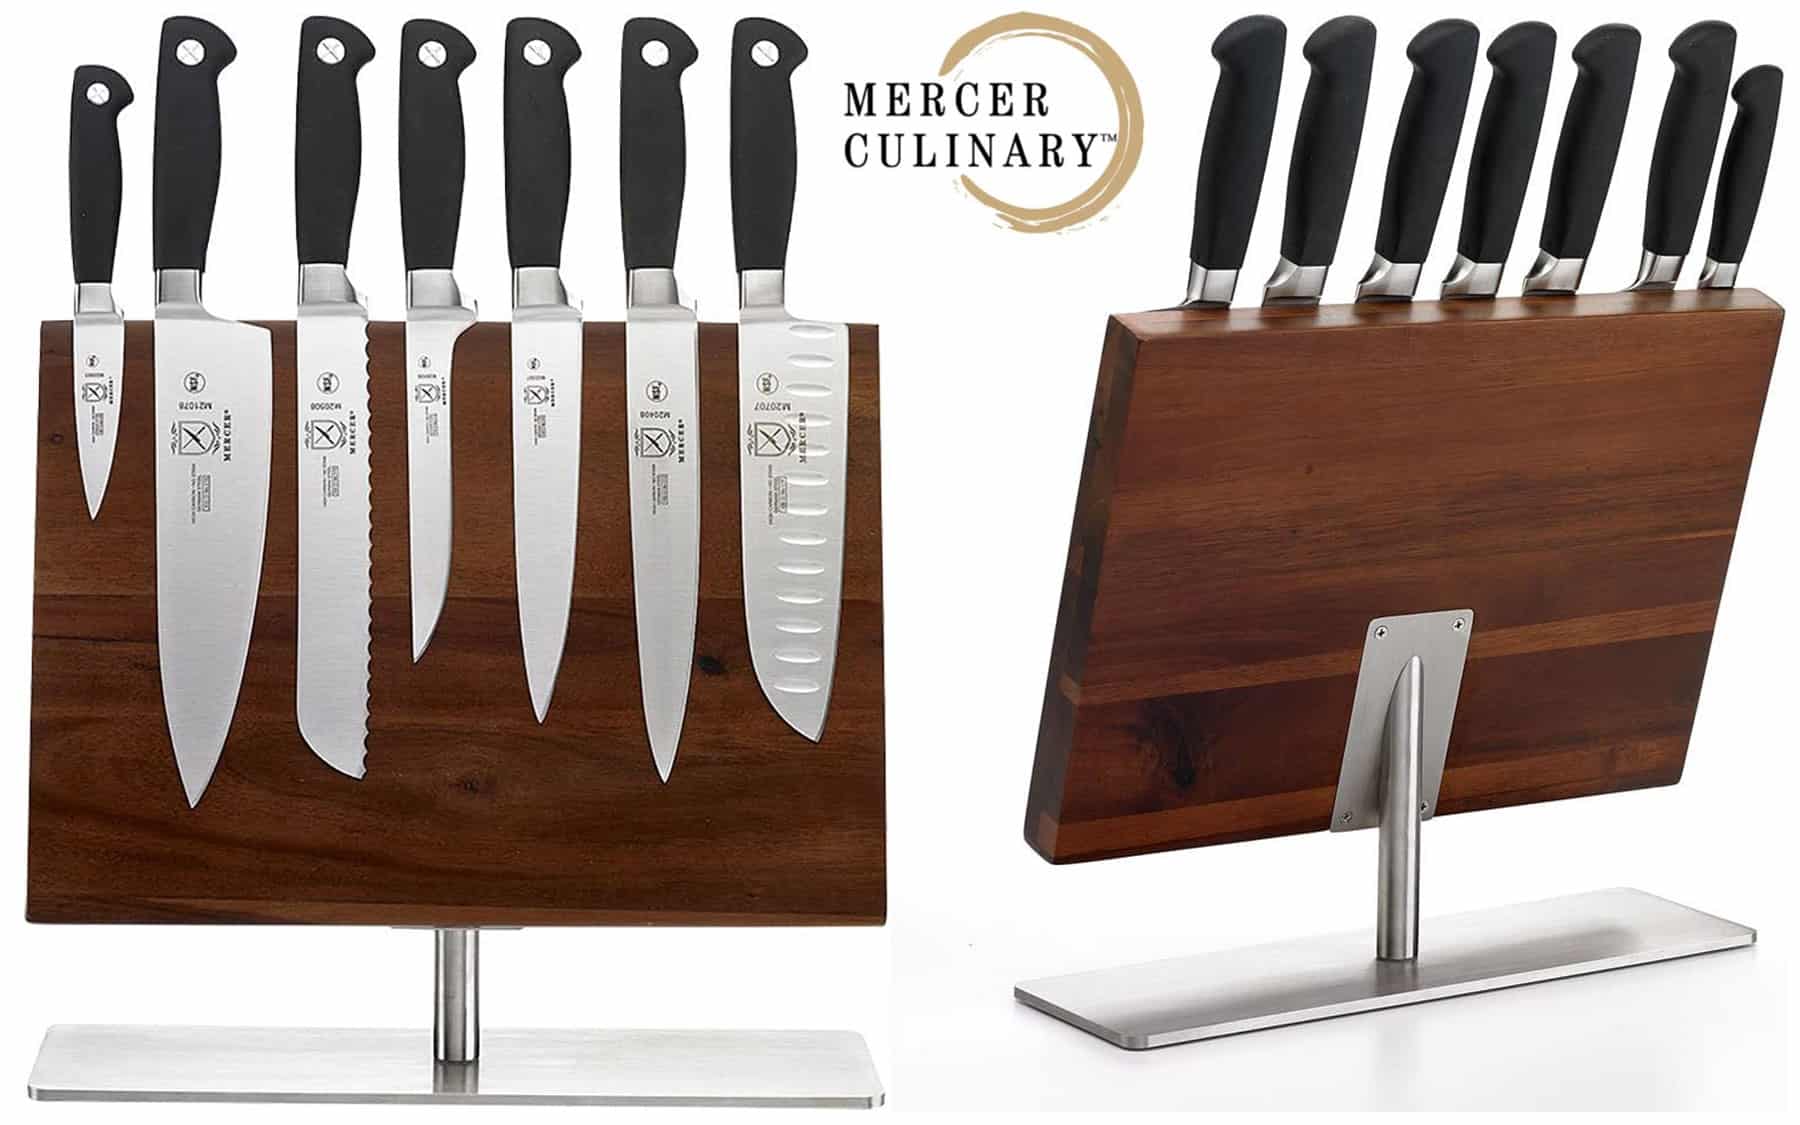 Mercer Culinary Genesis 7'' Santoku Knife Review 